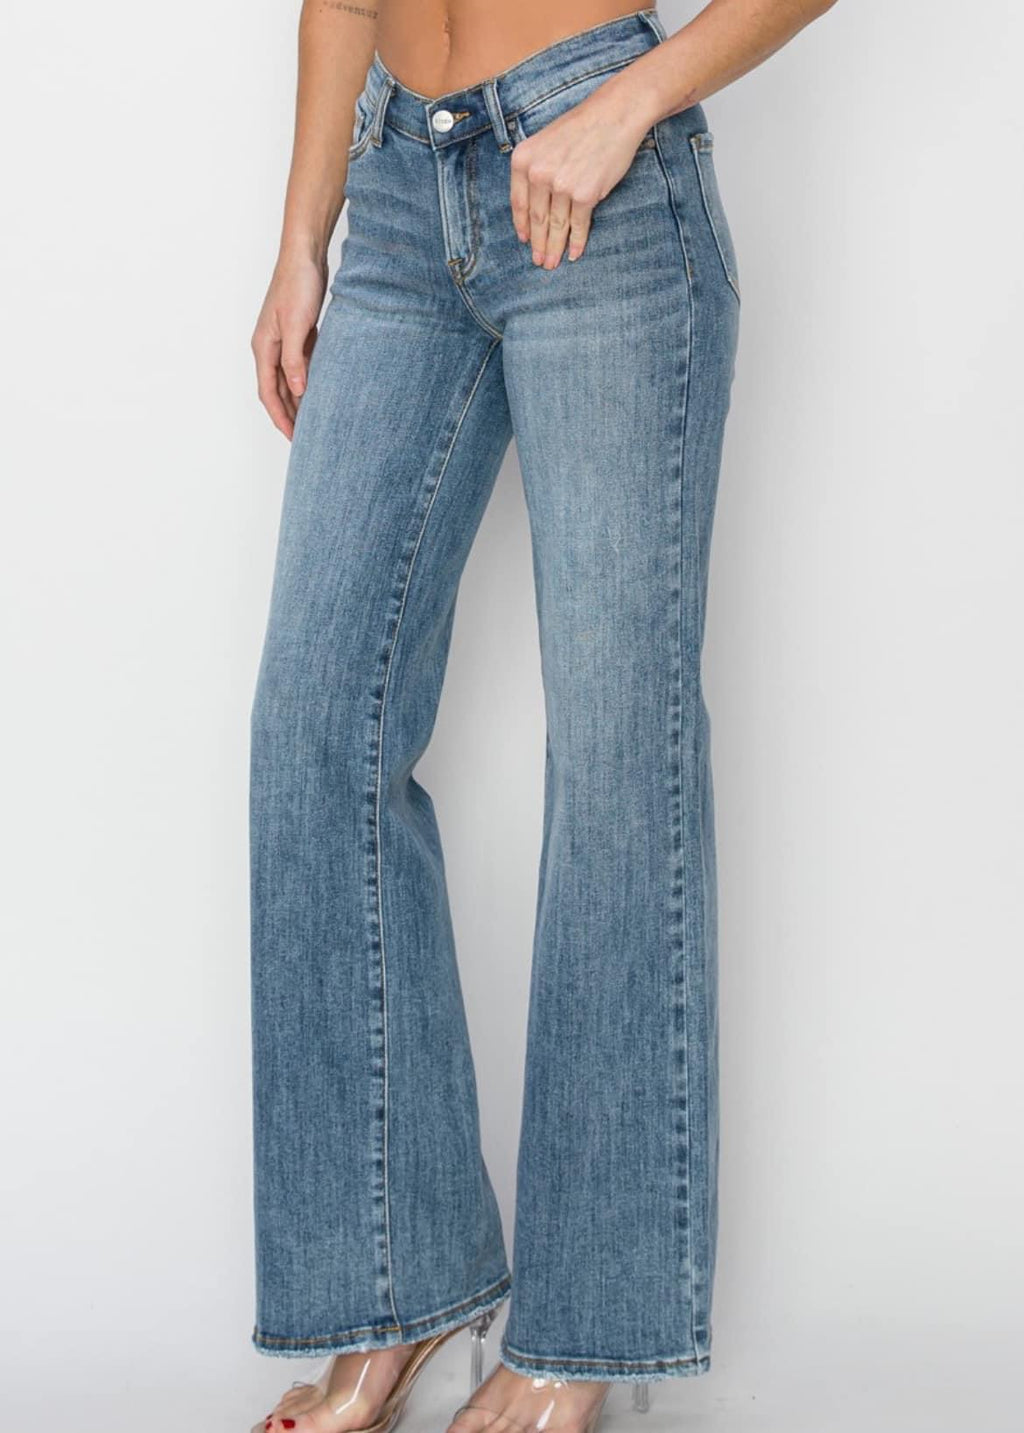 Jenna V Dip Jeans